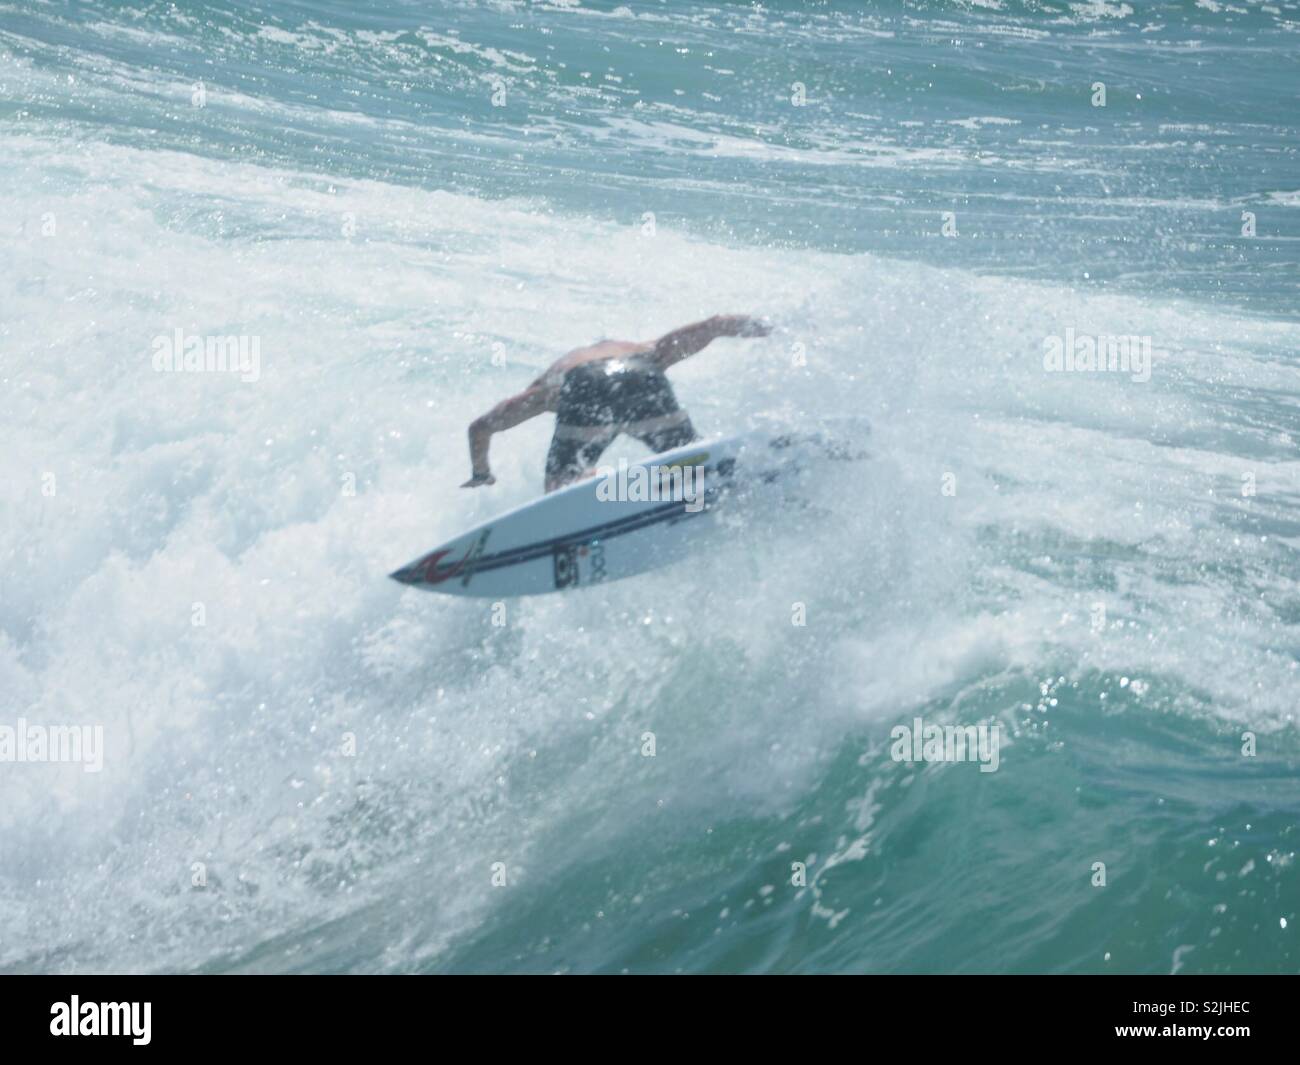 Board Rider / Surfing Stock Photo